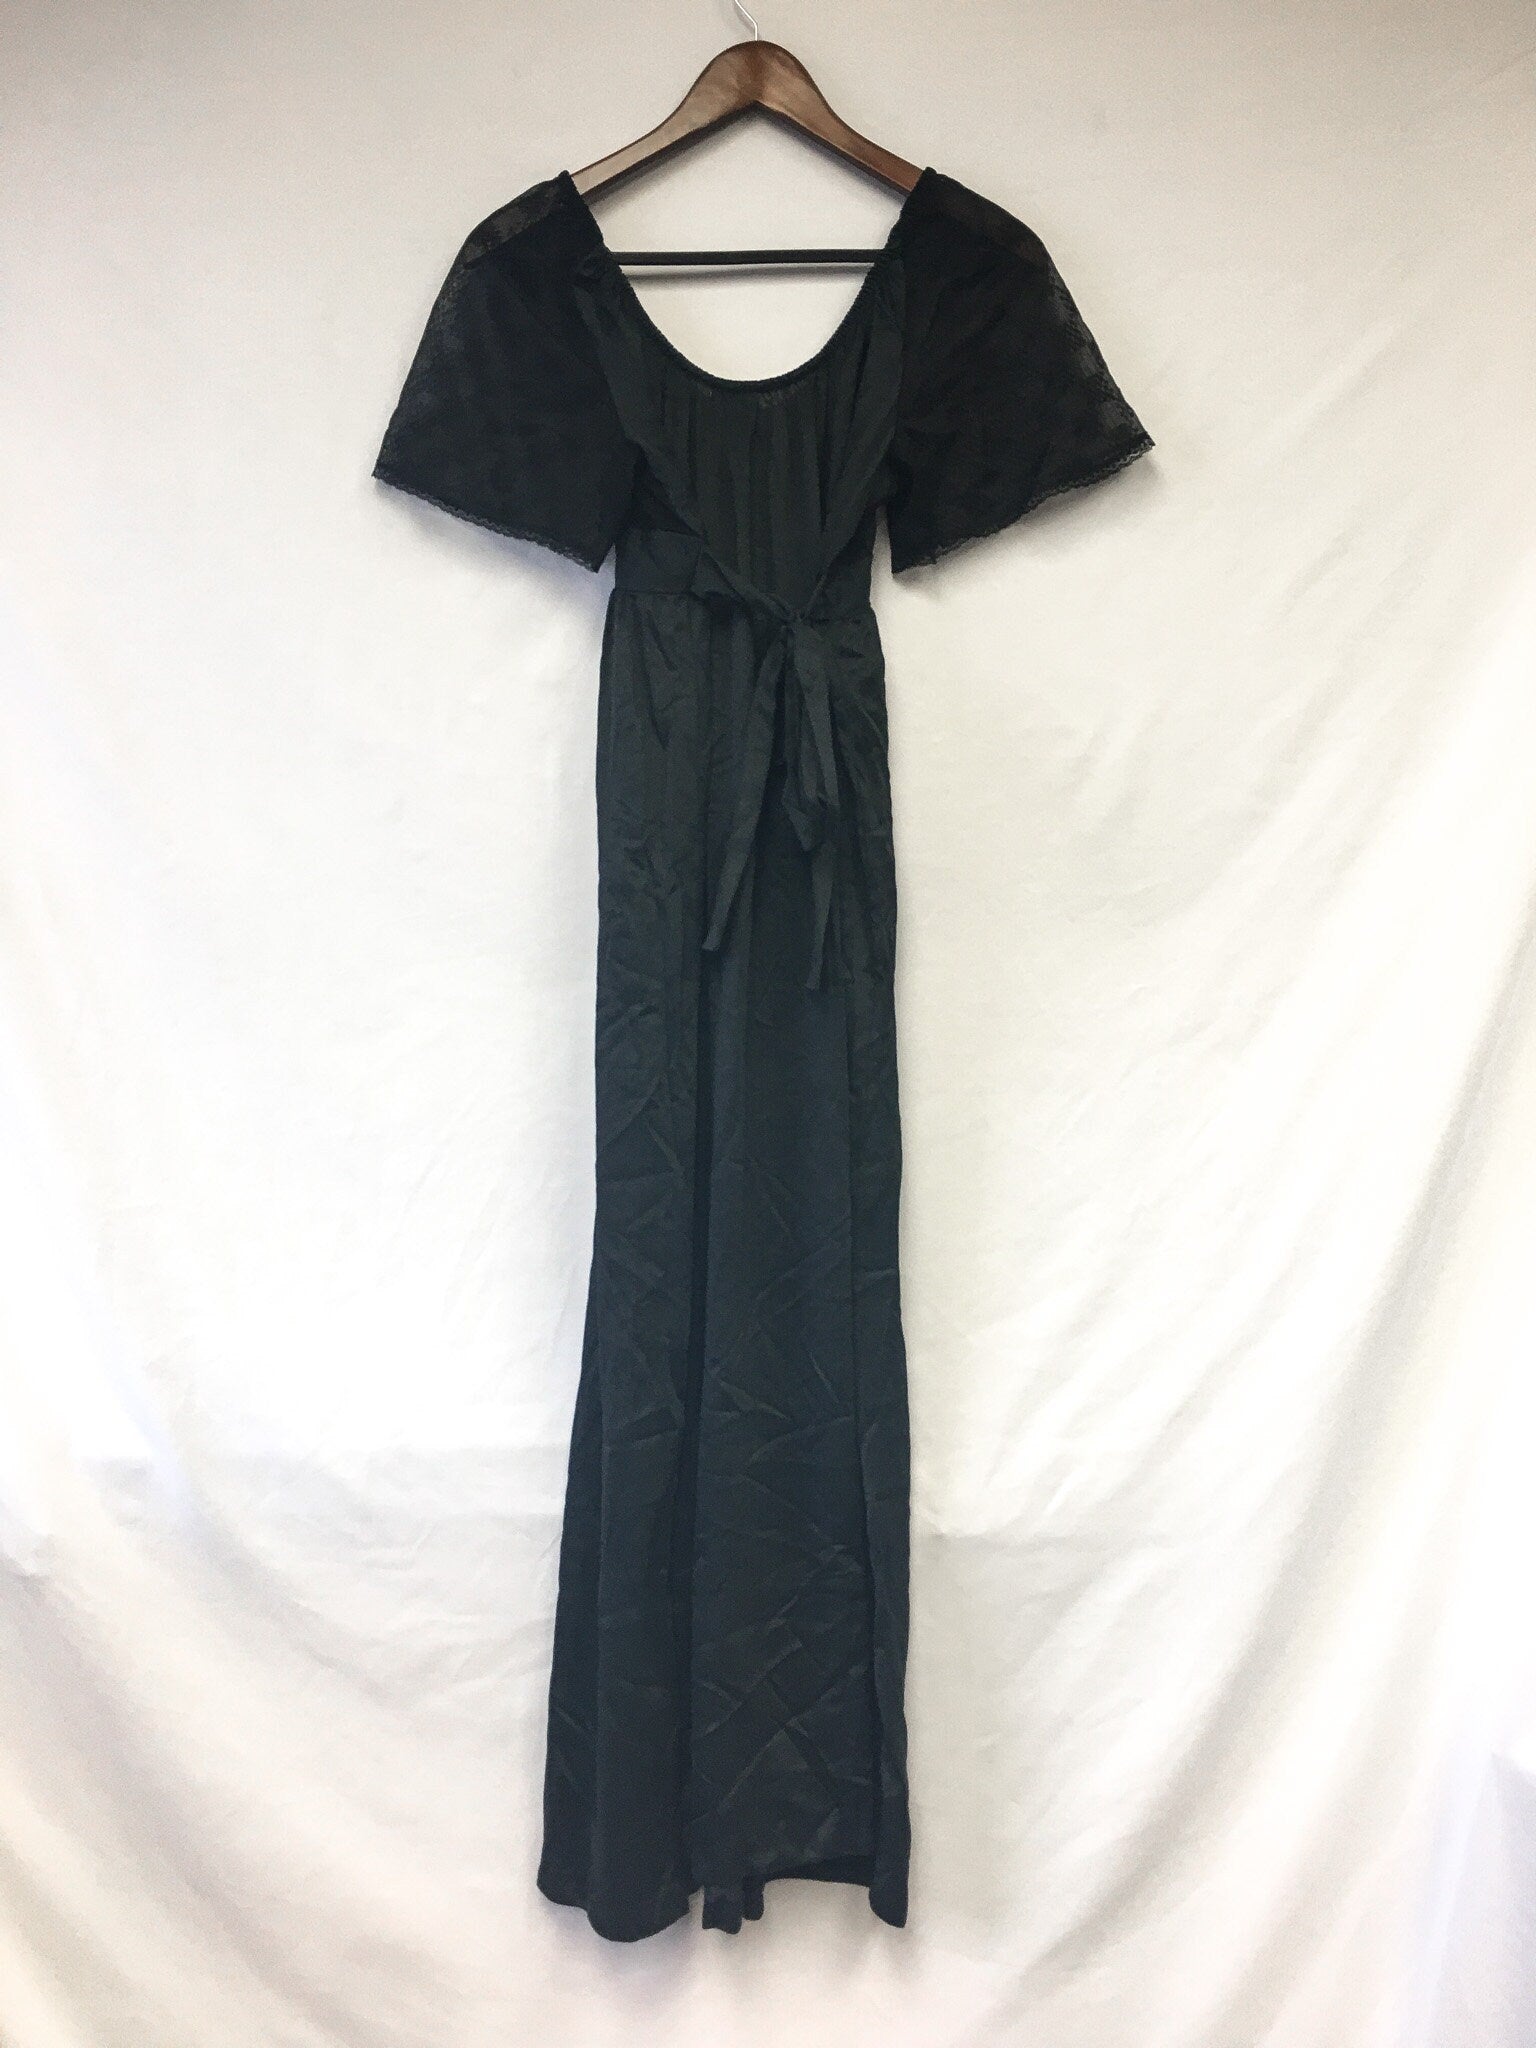 Vintage Gossard Artemis Black Short-Sleeved Lace Slip Dress with Adjustable Tie, Sz. M, Vintage Peignoir Dress